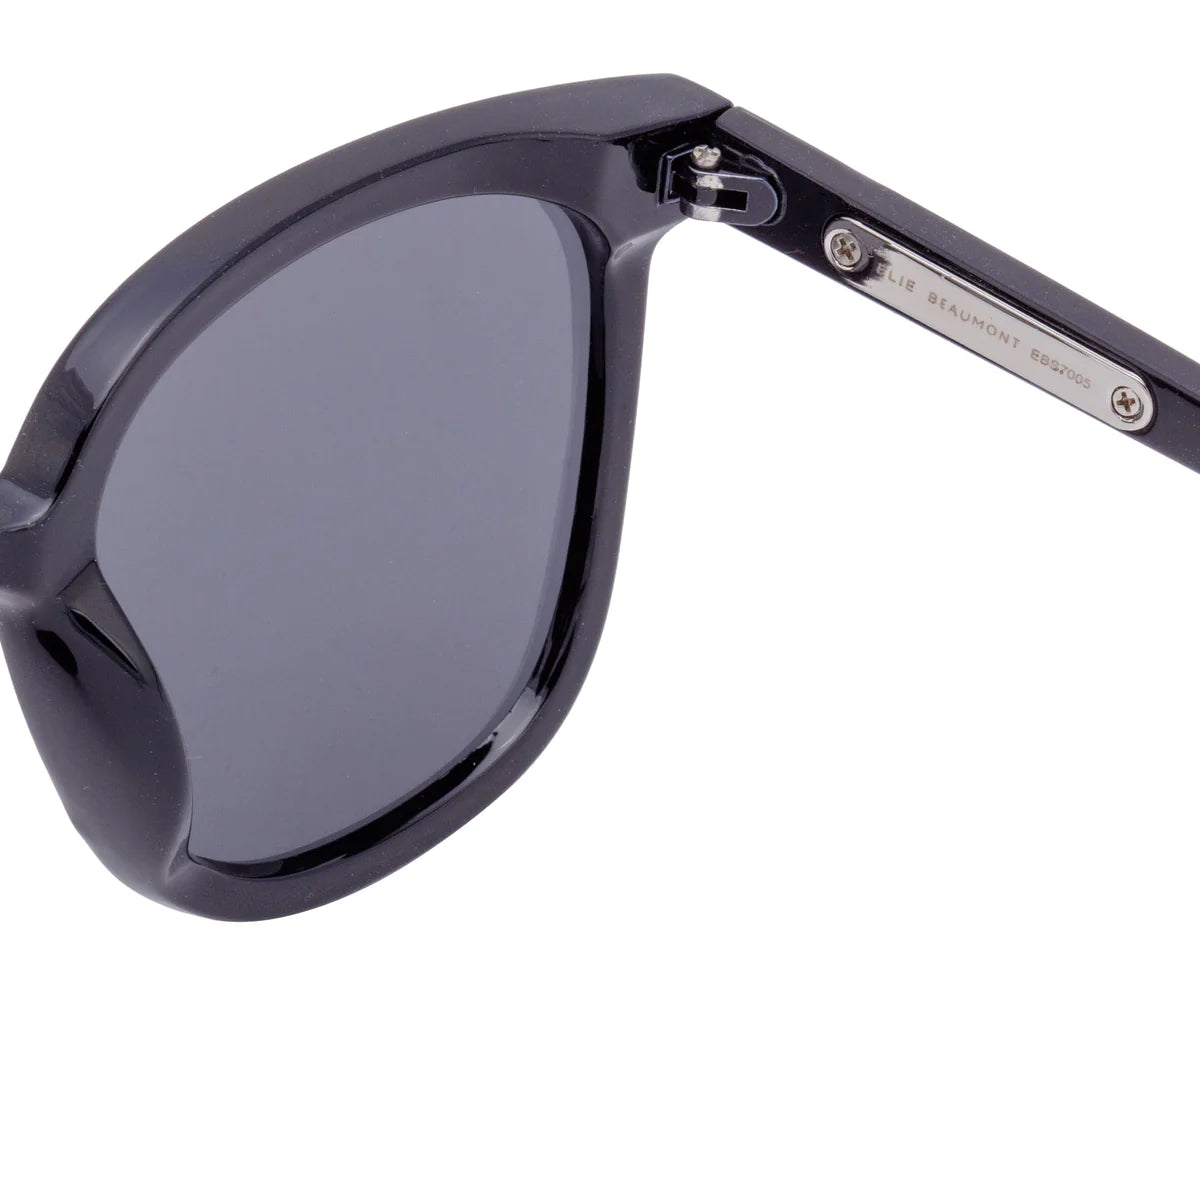 Hampton Black Oversized Sunglasses